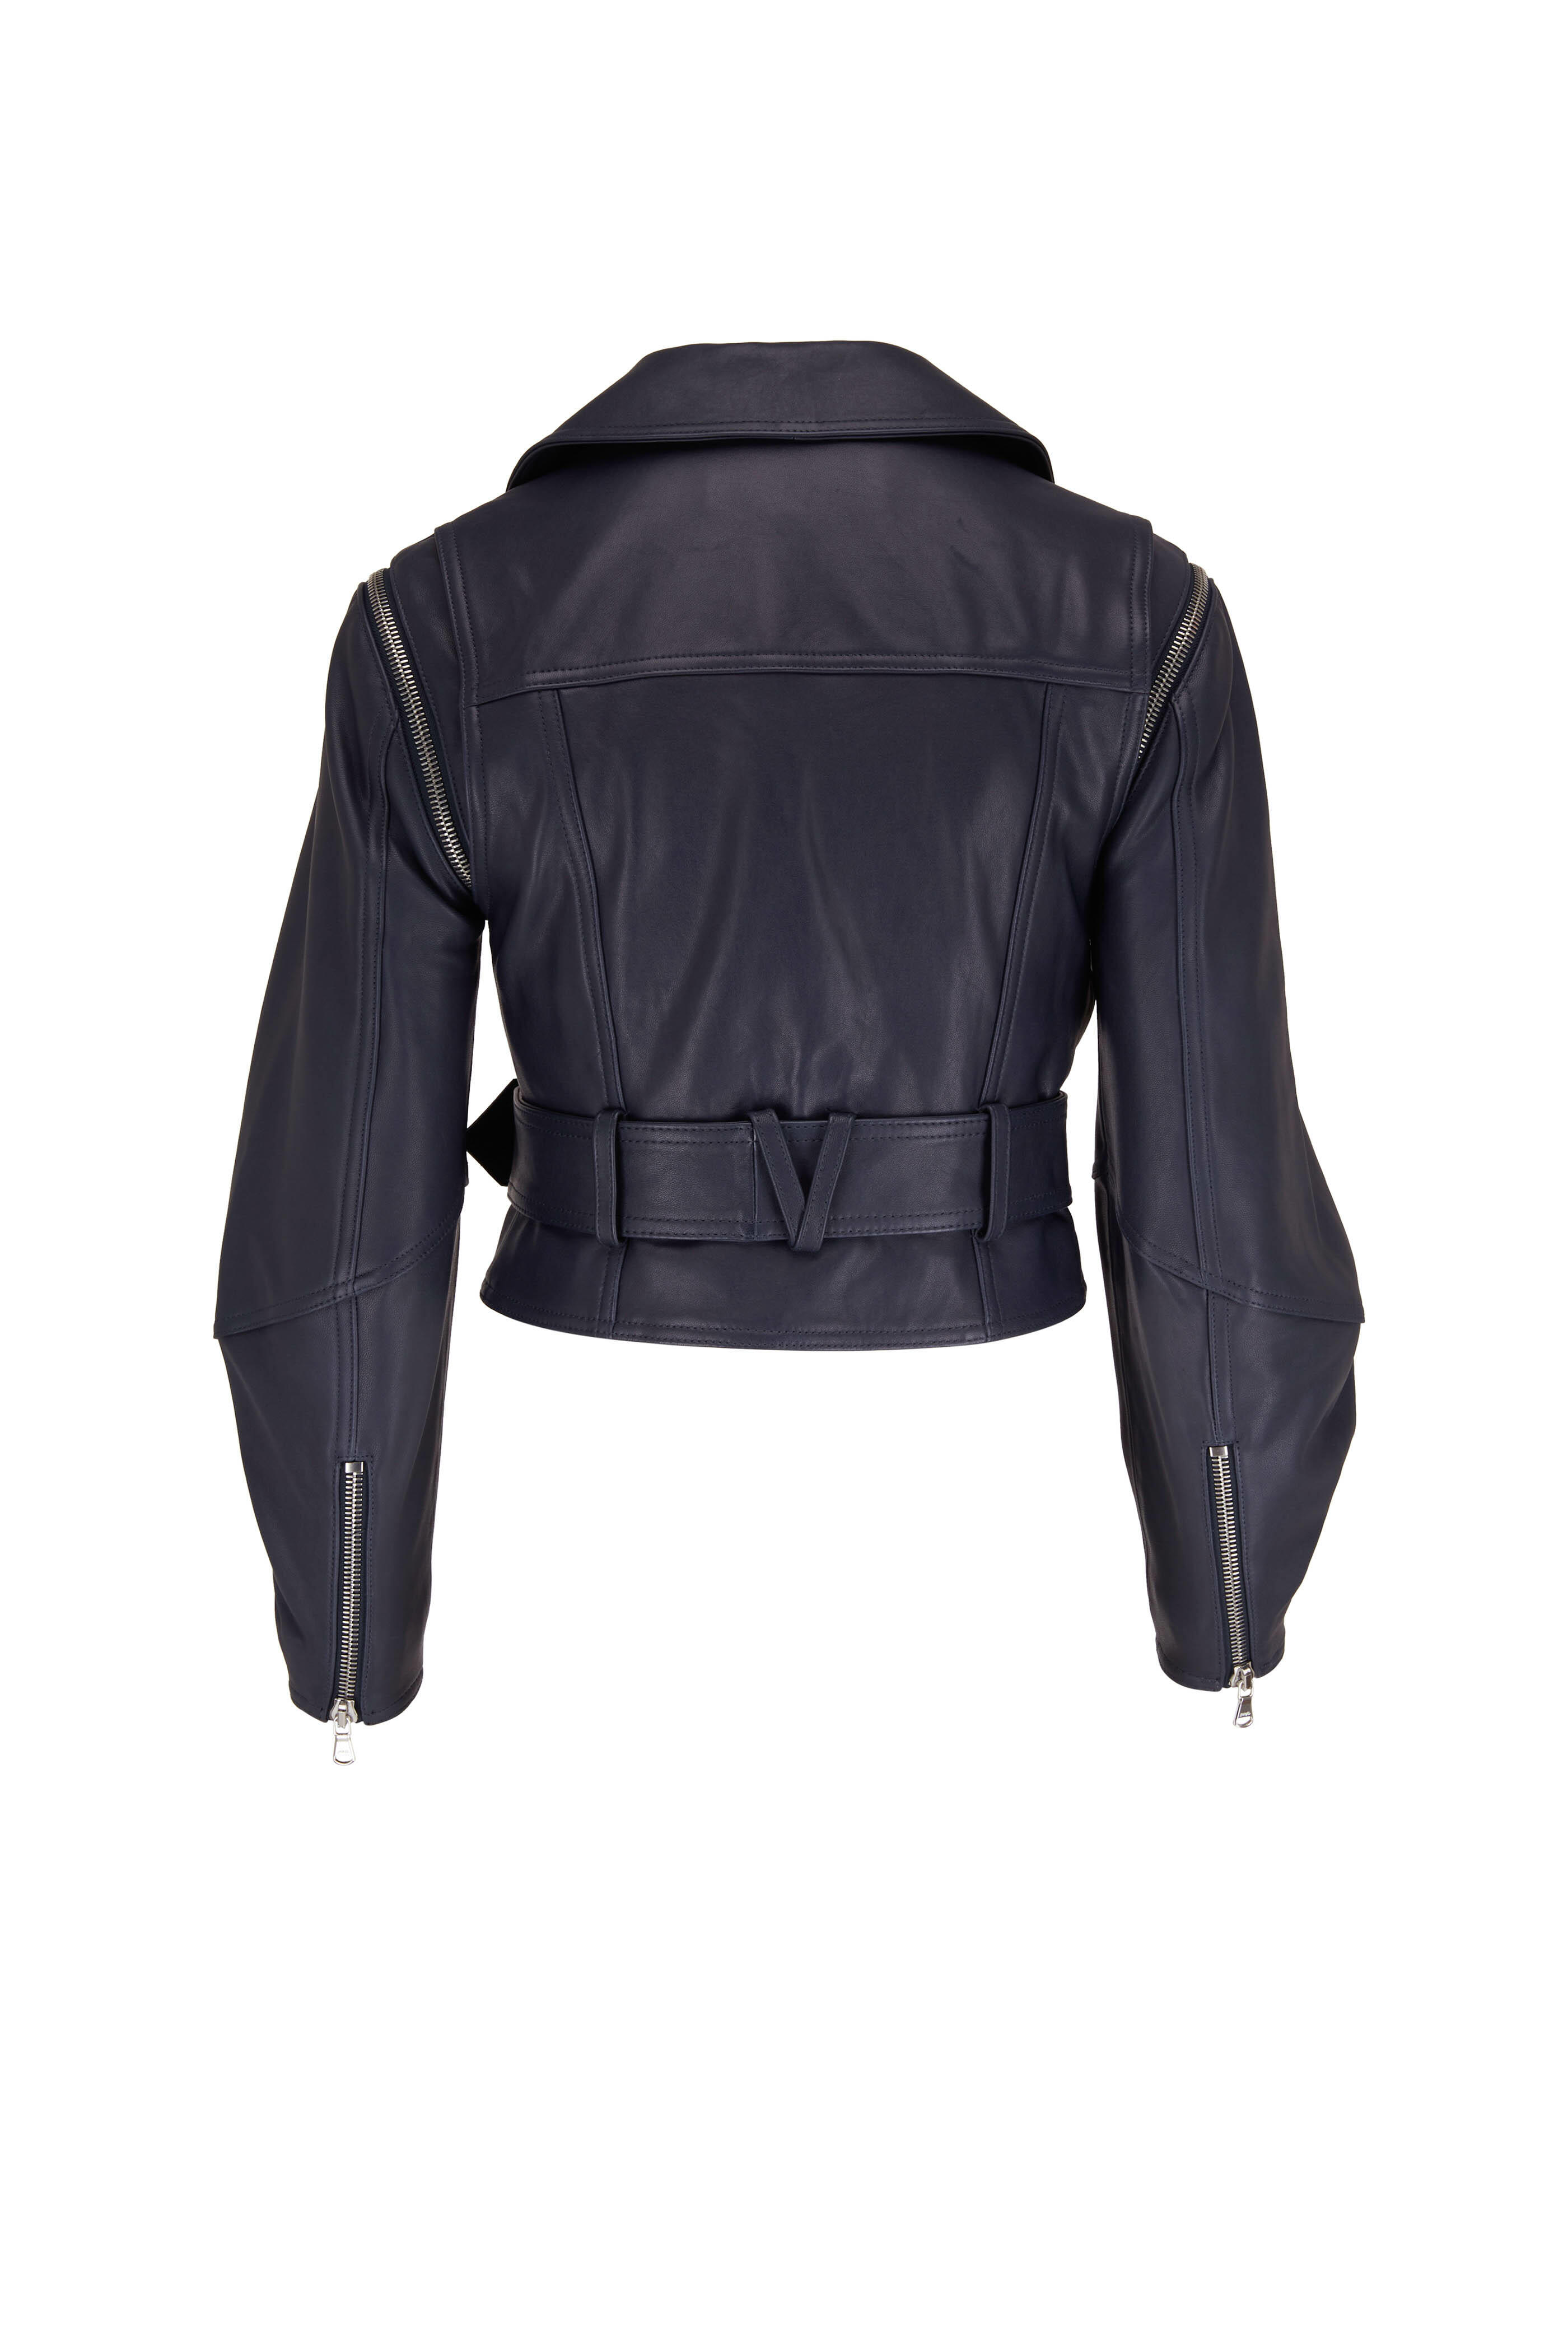 Veronica Beard - Jylan Jacket Navy Leather Moto Convertible